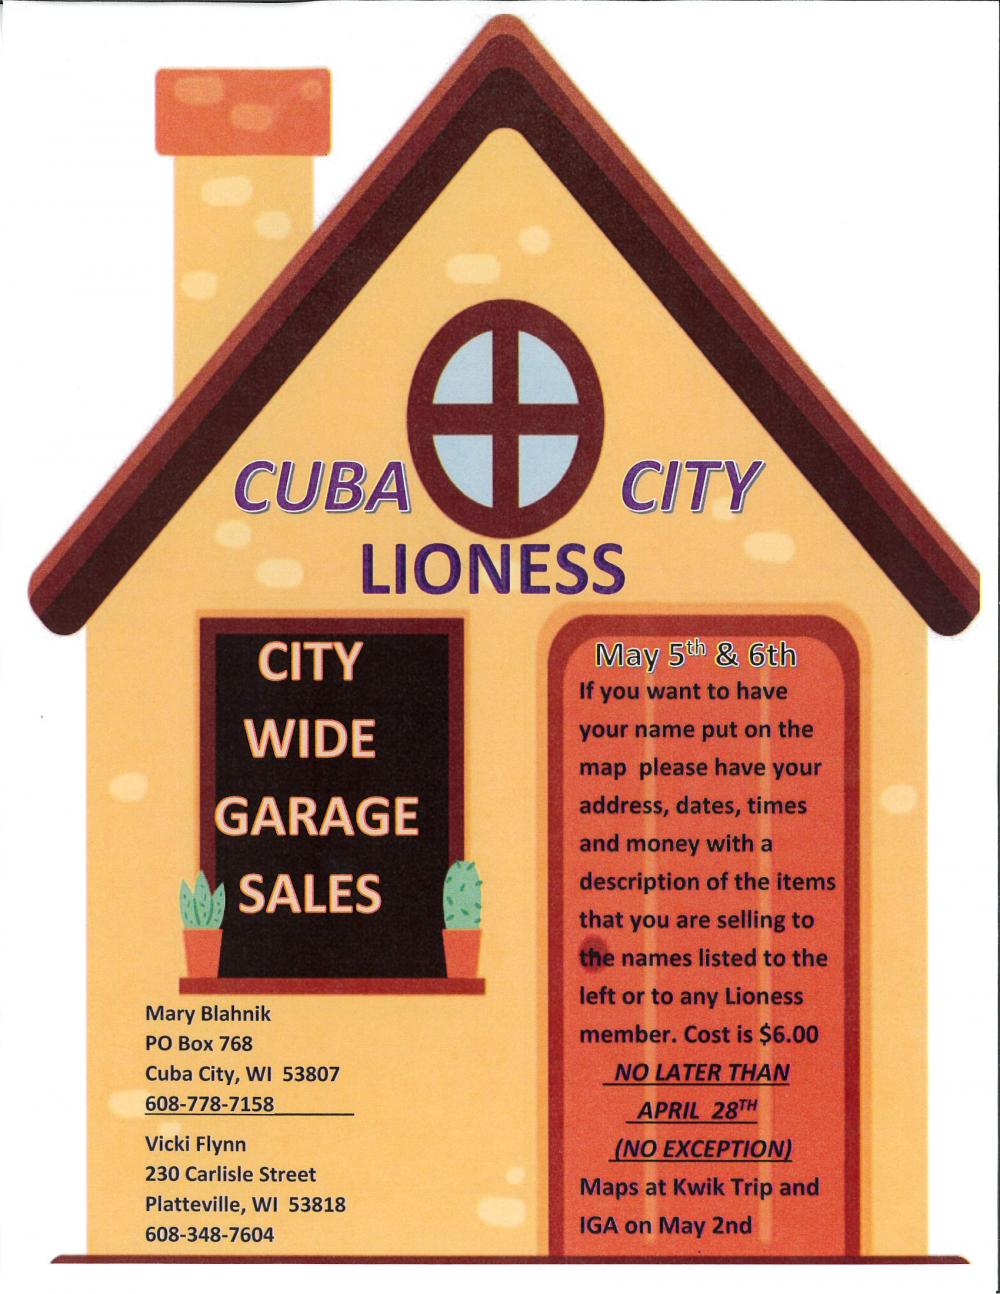 City Wide Garage Sales City of Cuba City Wisconsin